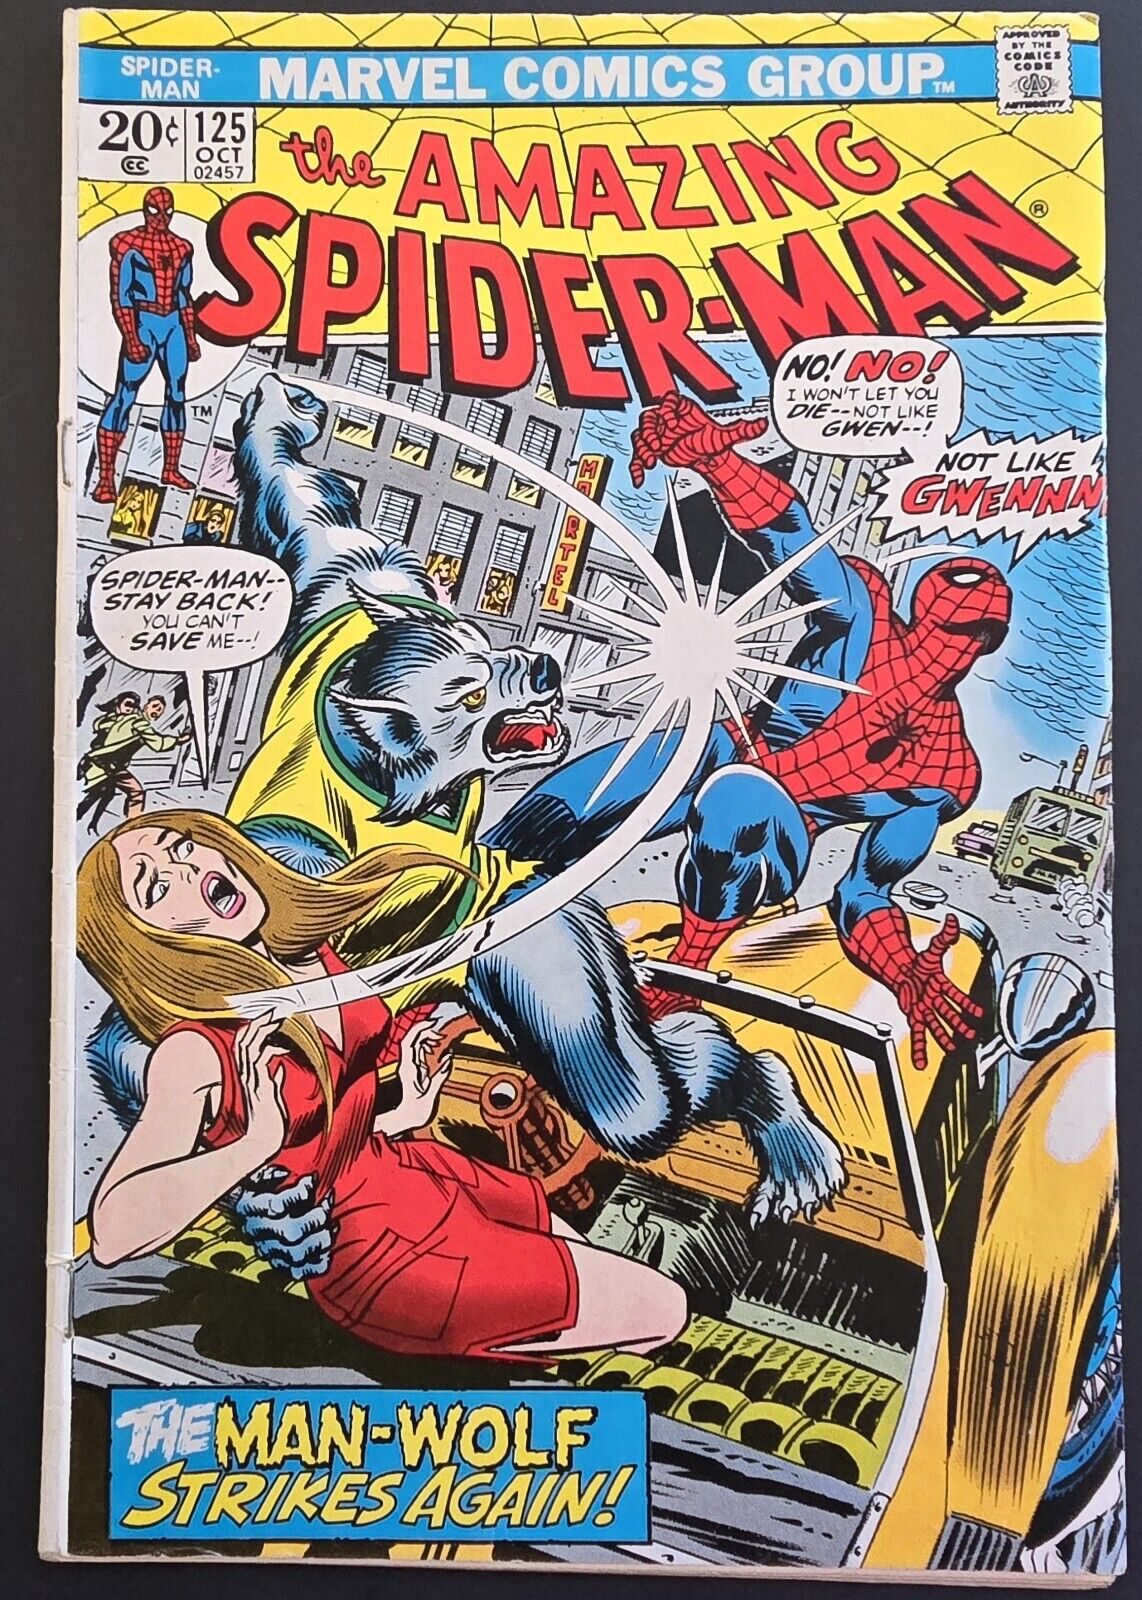 THE AMAZING SPIDER-MAN #125 COMIC BOOK (MARVEL COMICS GROUP, 1973) BRONZE AGE +